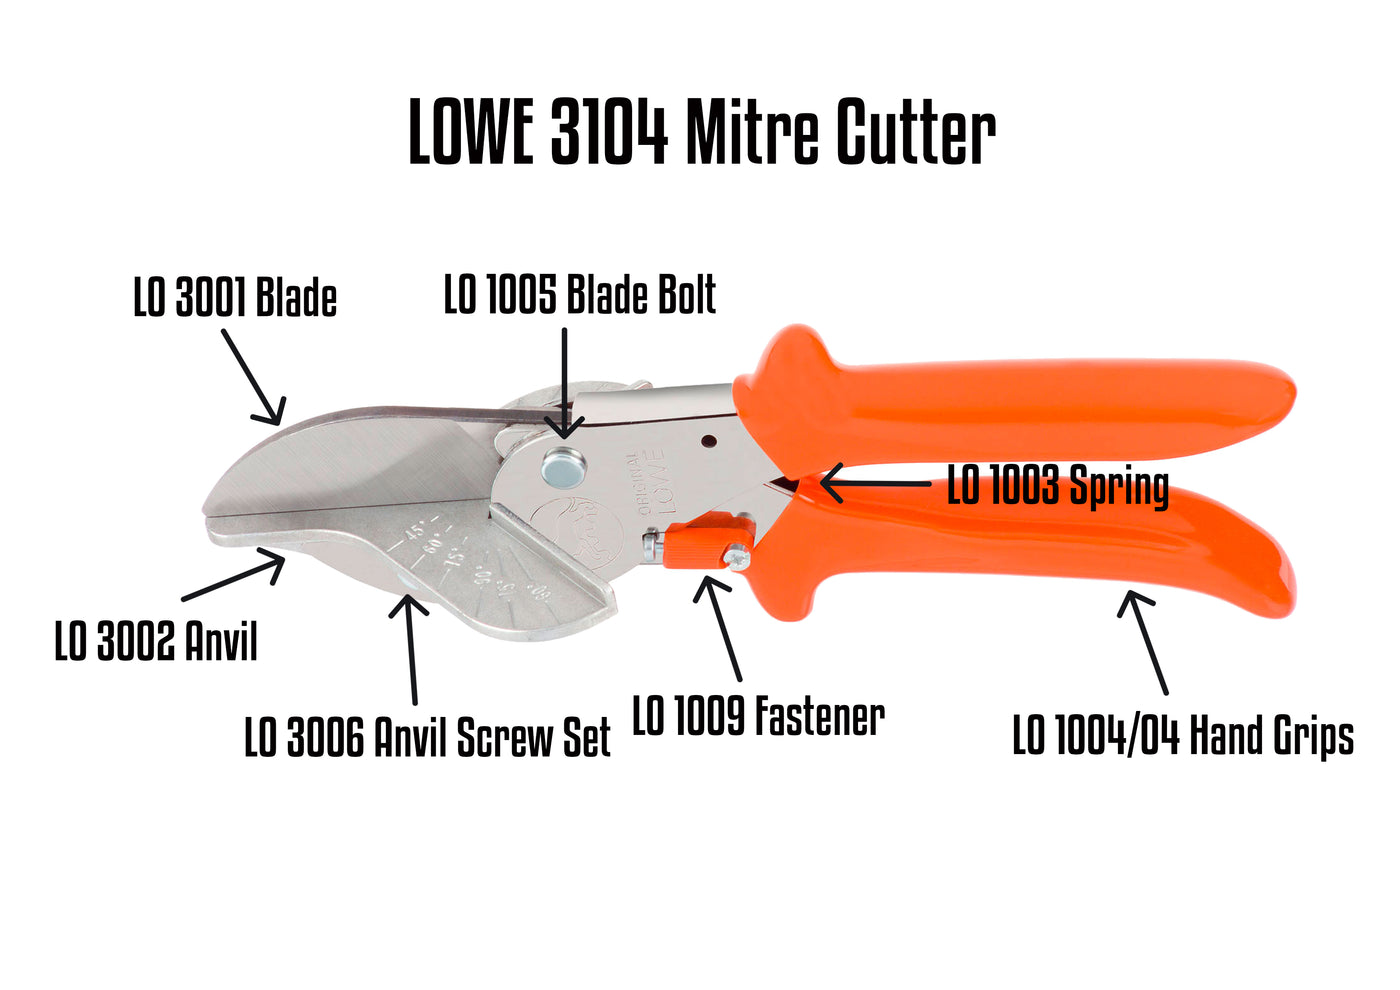 LO 3104 Mitre Cutter